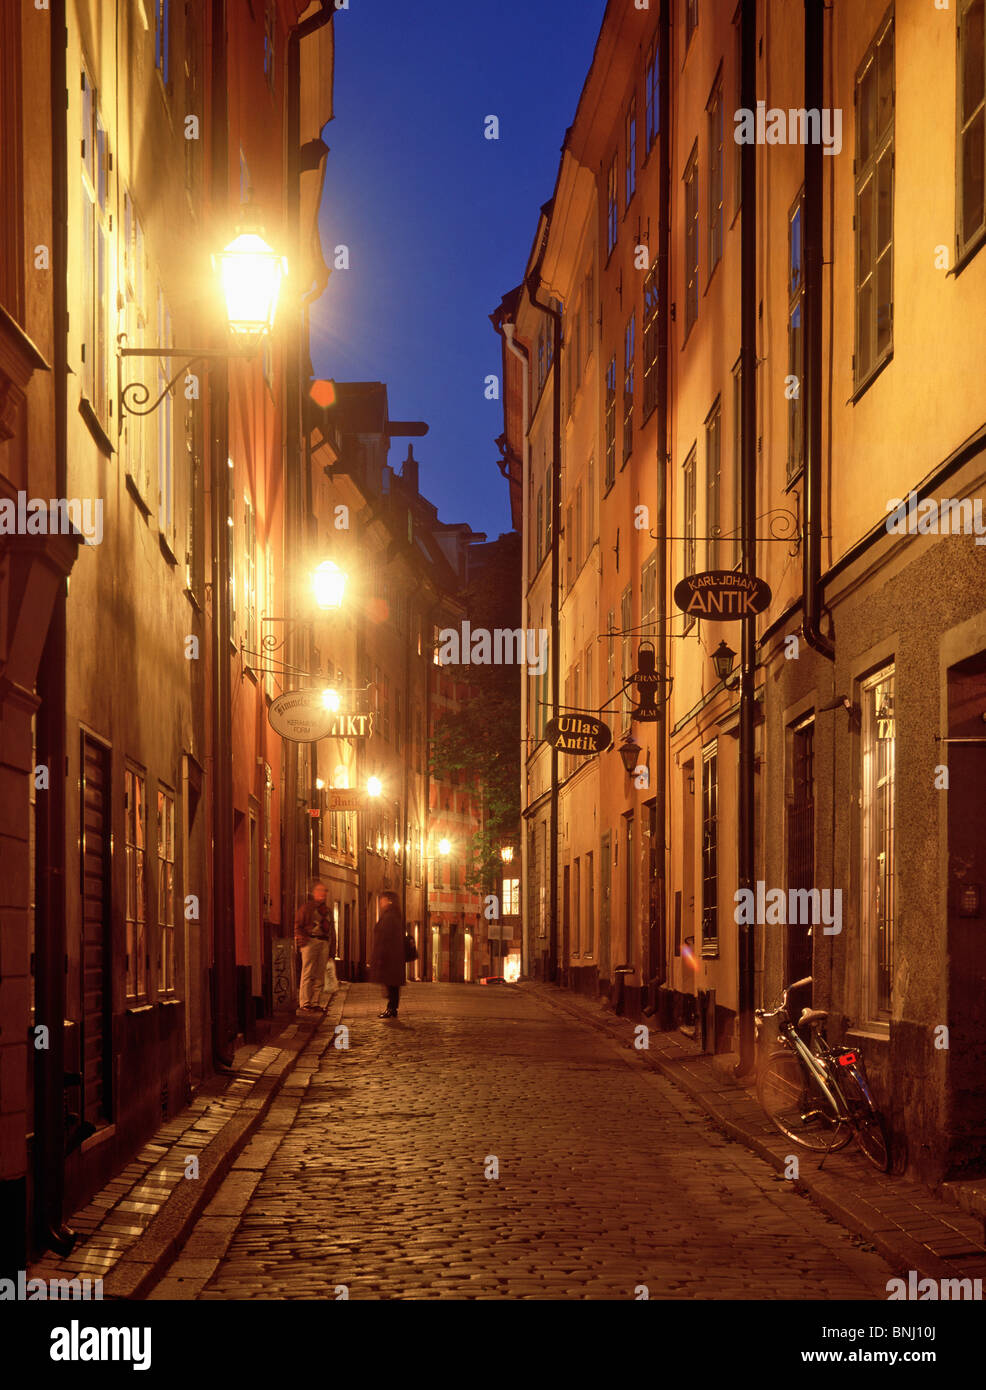 Sweden Scandinavia Stockholm Old Town lane alley lights in evening cobblestones night Stock Photo